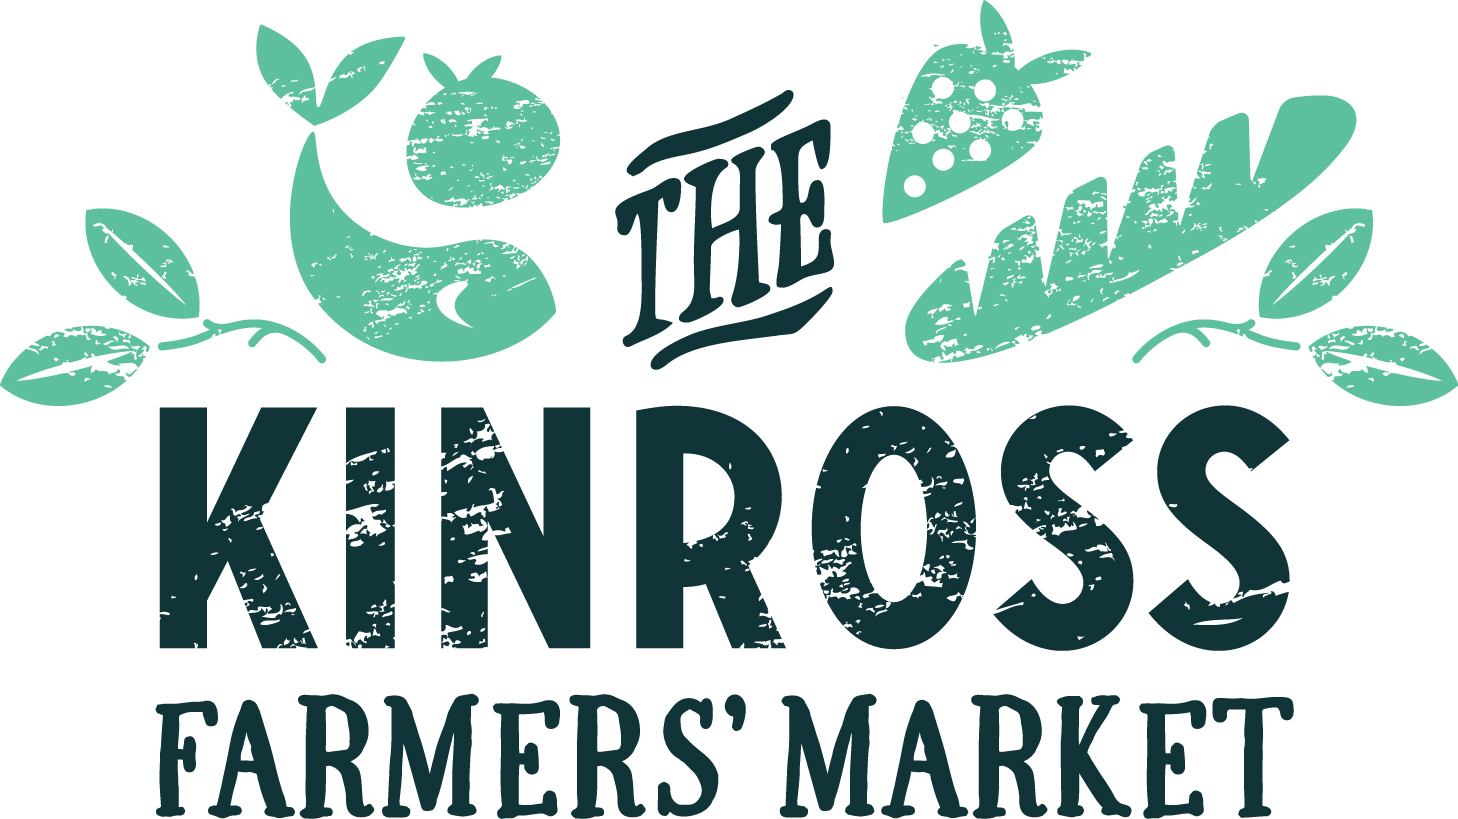 Kinross Farmers' Market logo